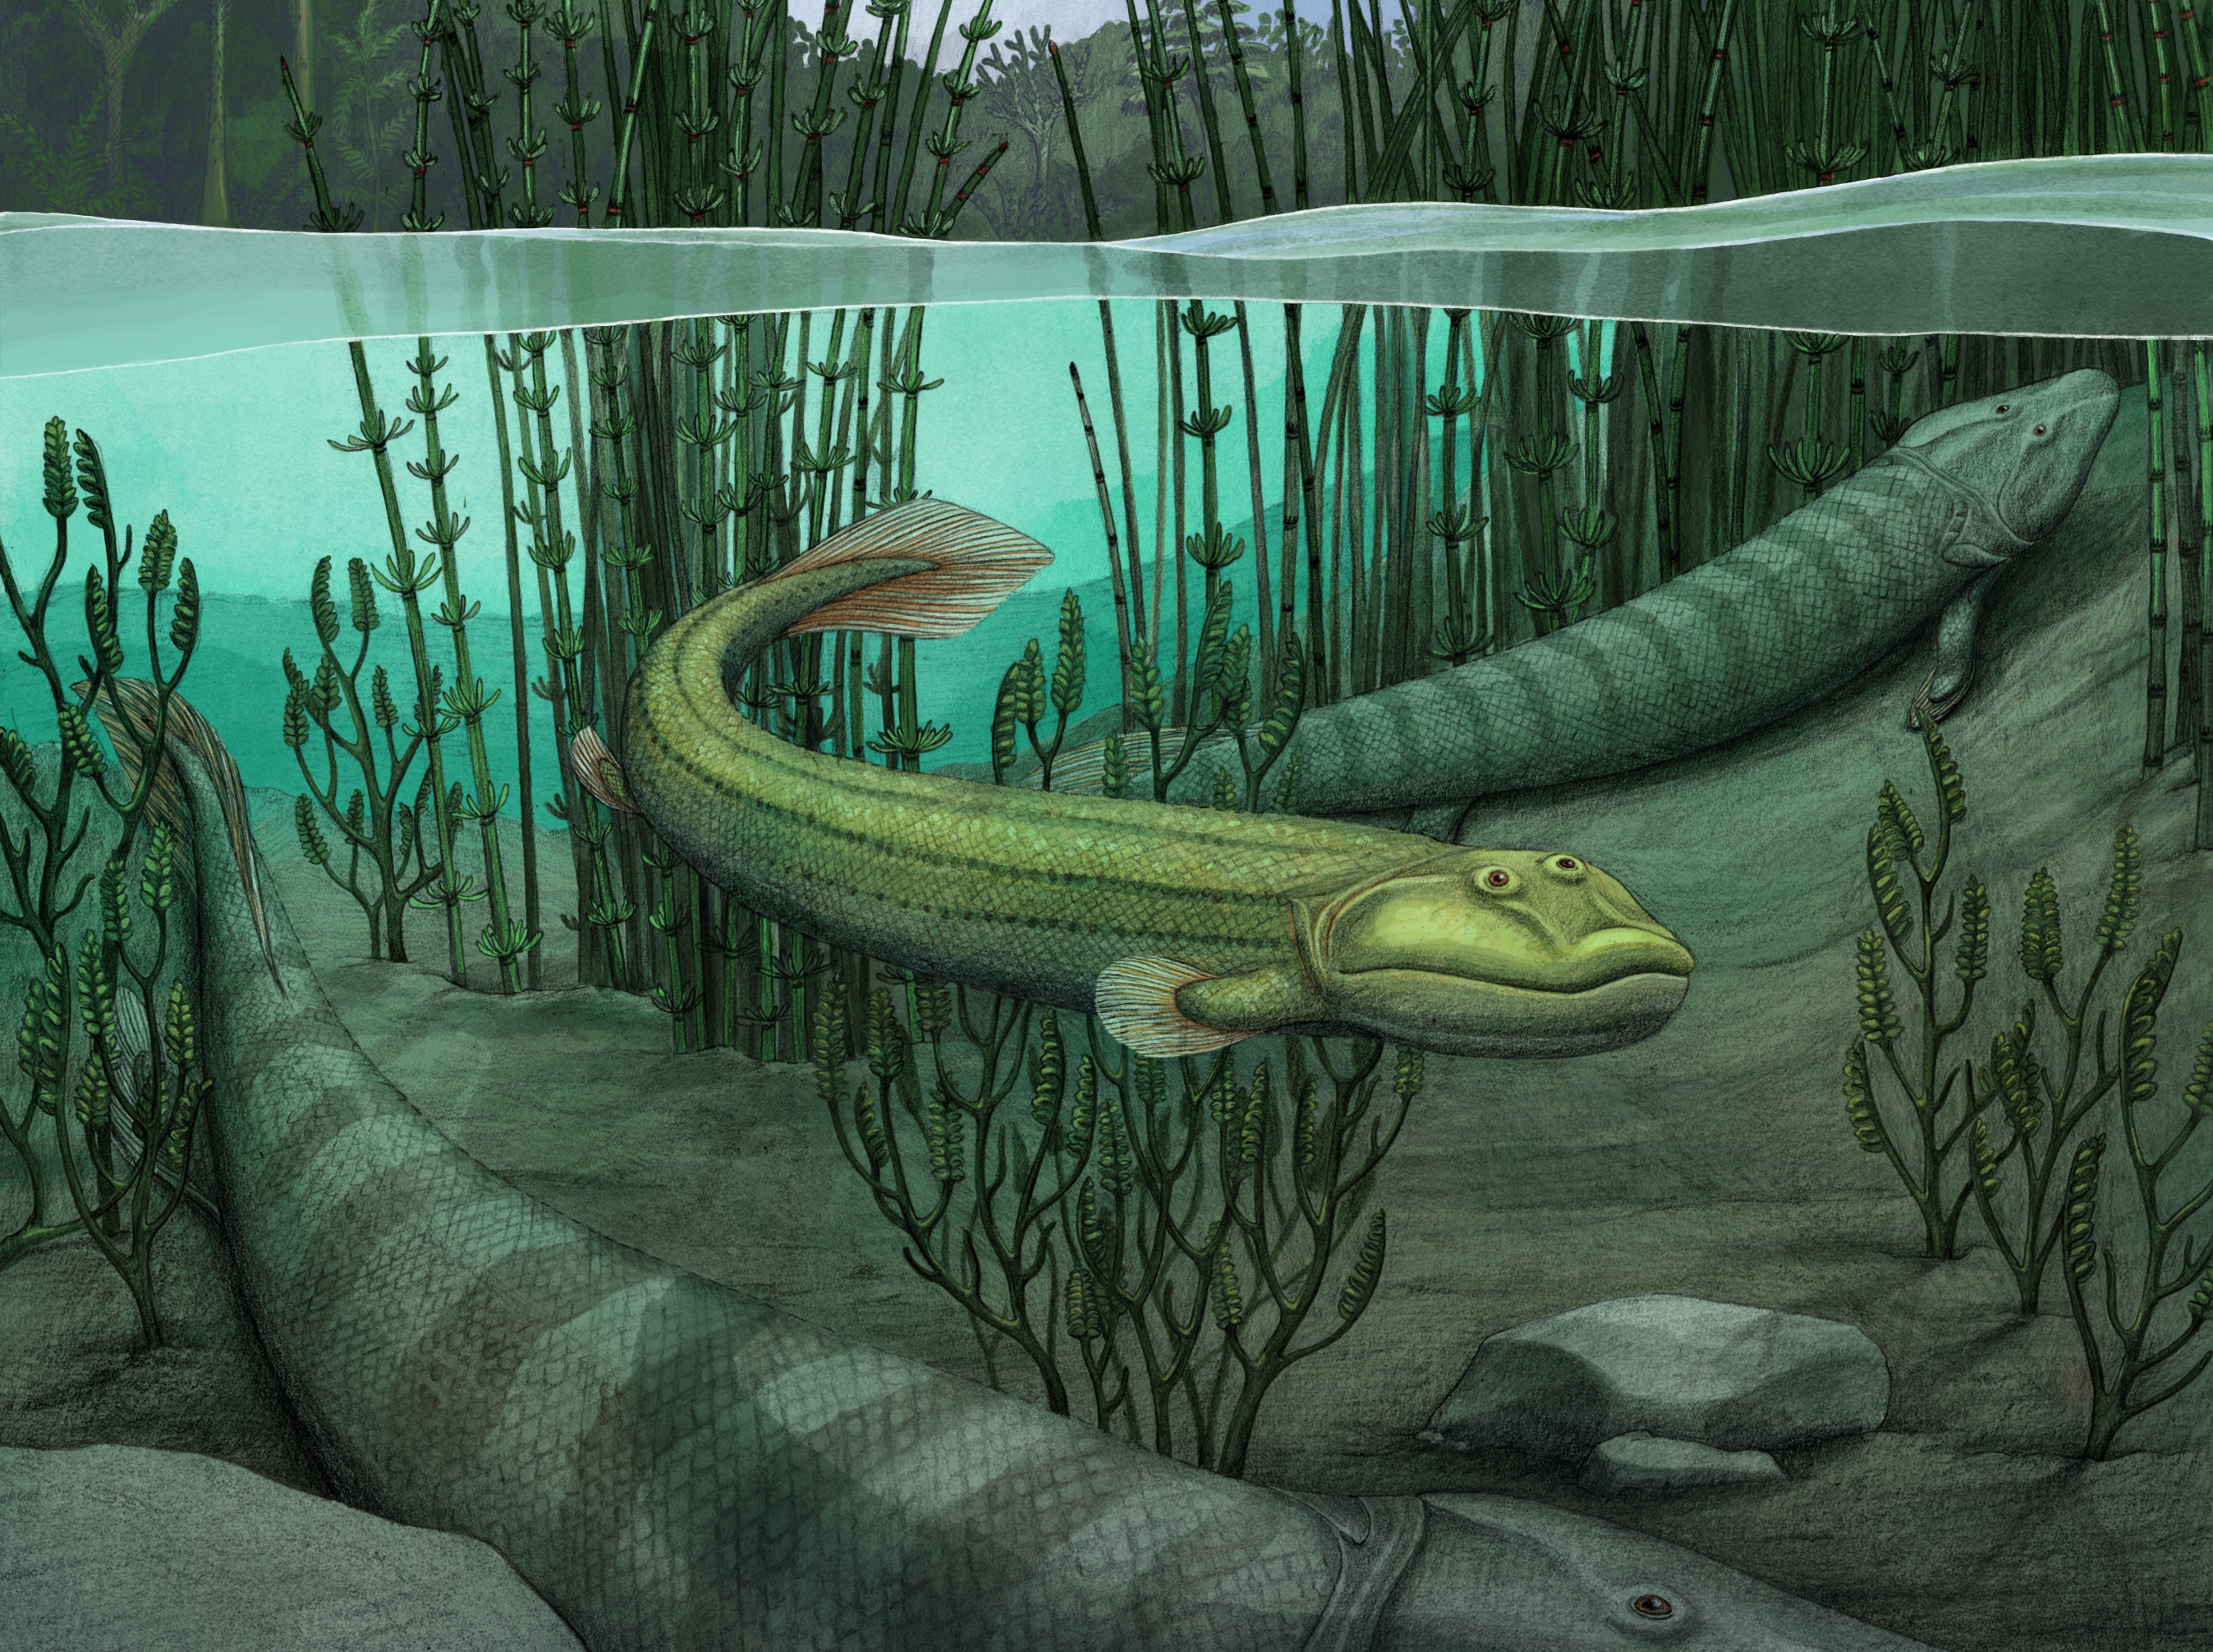 The new fossil fish, Qikiqtania wakei, with its famous cousin Tiktaalik below.